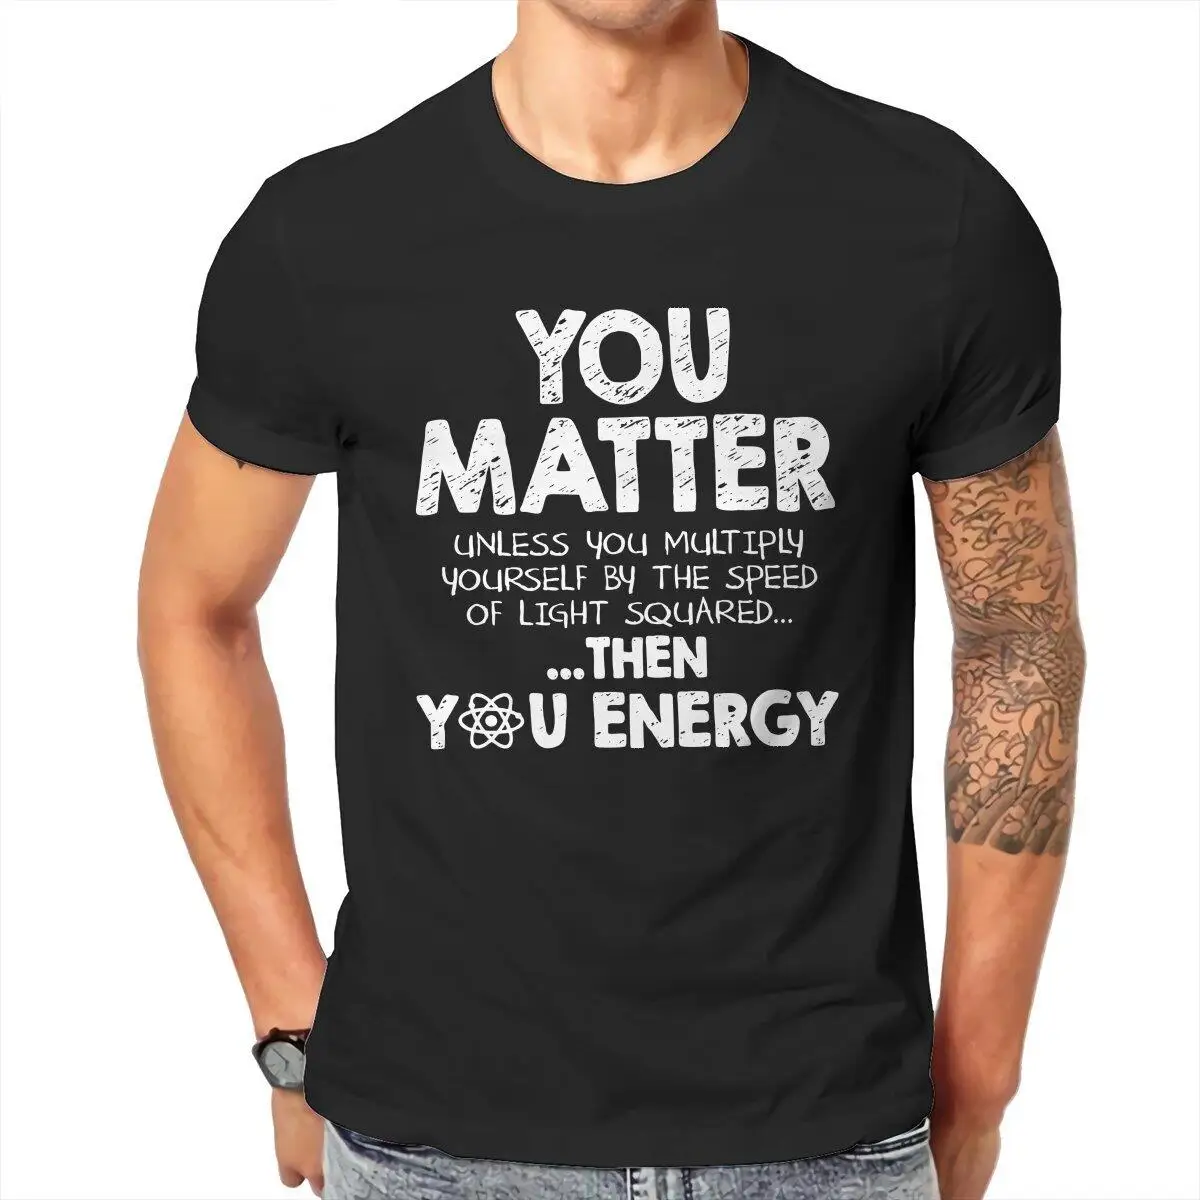 Men Science  T Shirt Chemistry Physics Math Cotton Tops Funny Short Sleeve Crew Neck Tee Shirt New Arrival T-Shirt